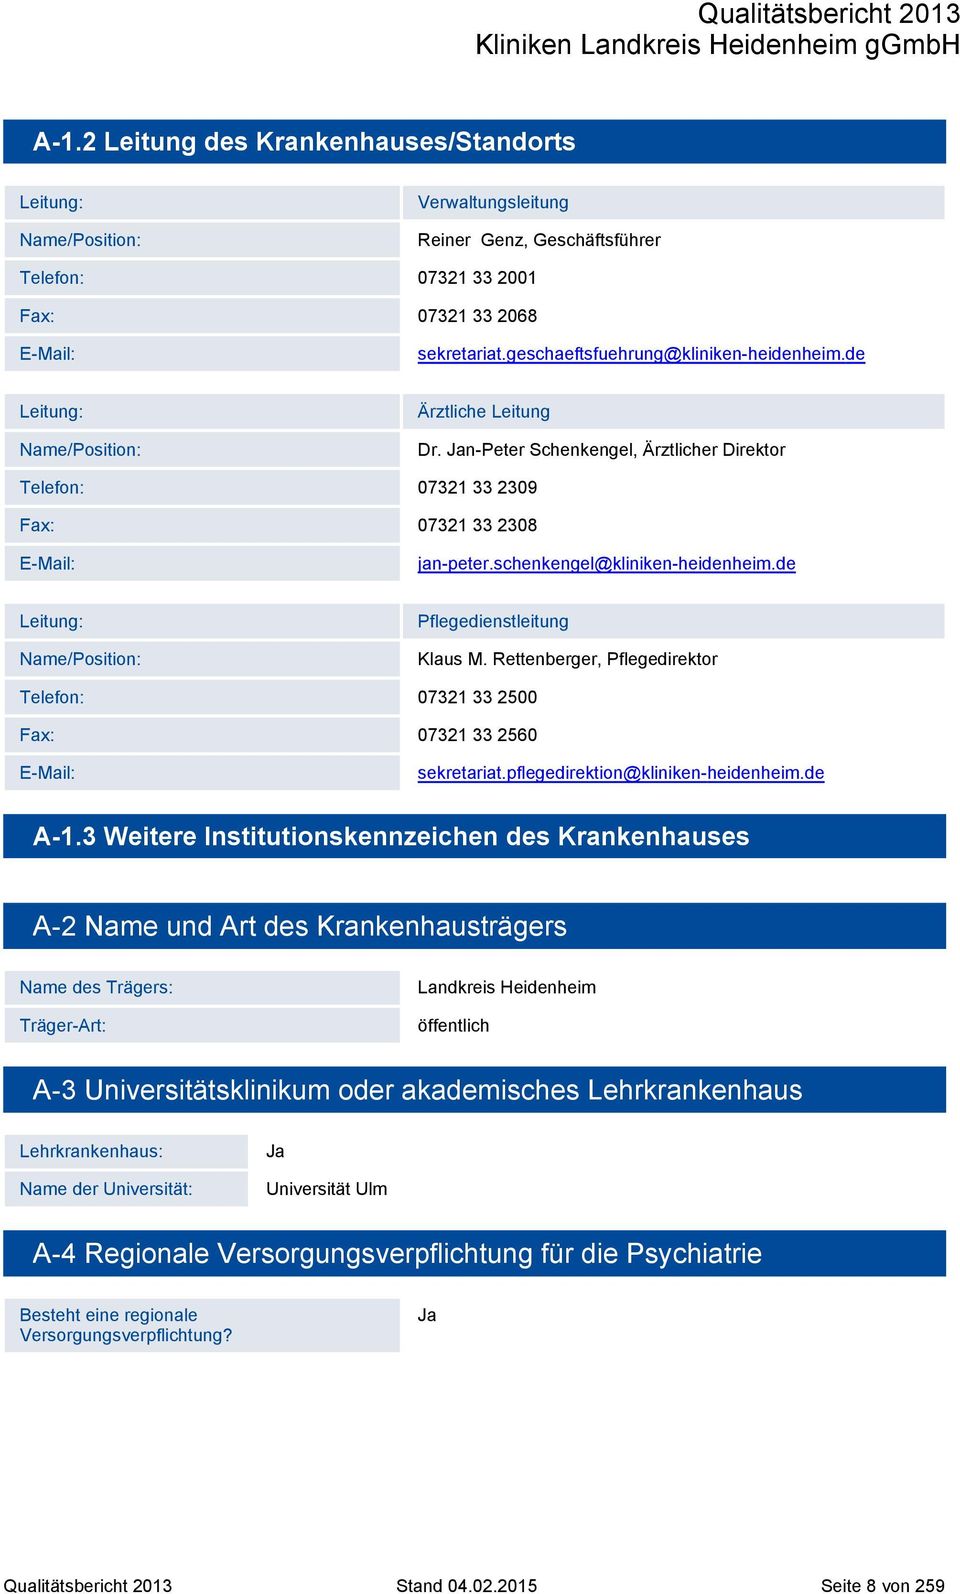 schenkengel@kliniken-heidenheim.de Leitung: Name/Position: Pflegedienstleitung Klaus M. Rettenberger, Pflegedirektor Telefon: 07321 33 2500 Fax: 07321 33 2560 E-Mail: sekretariat.